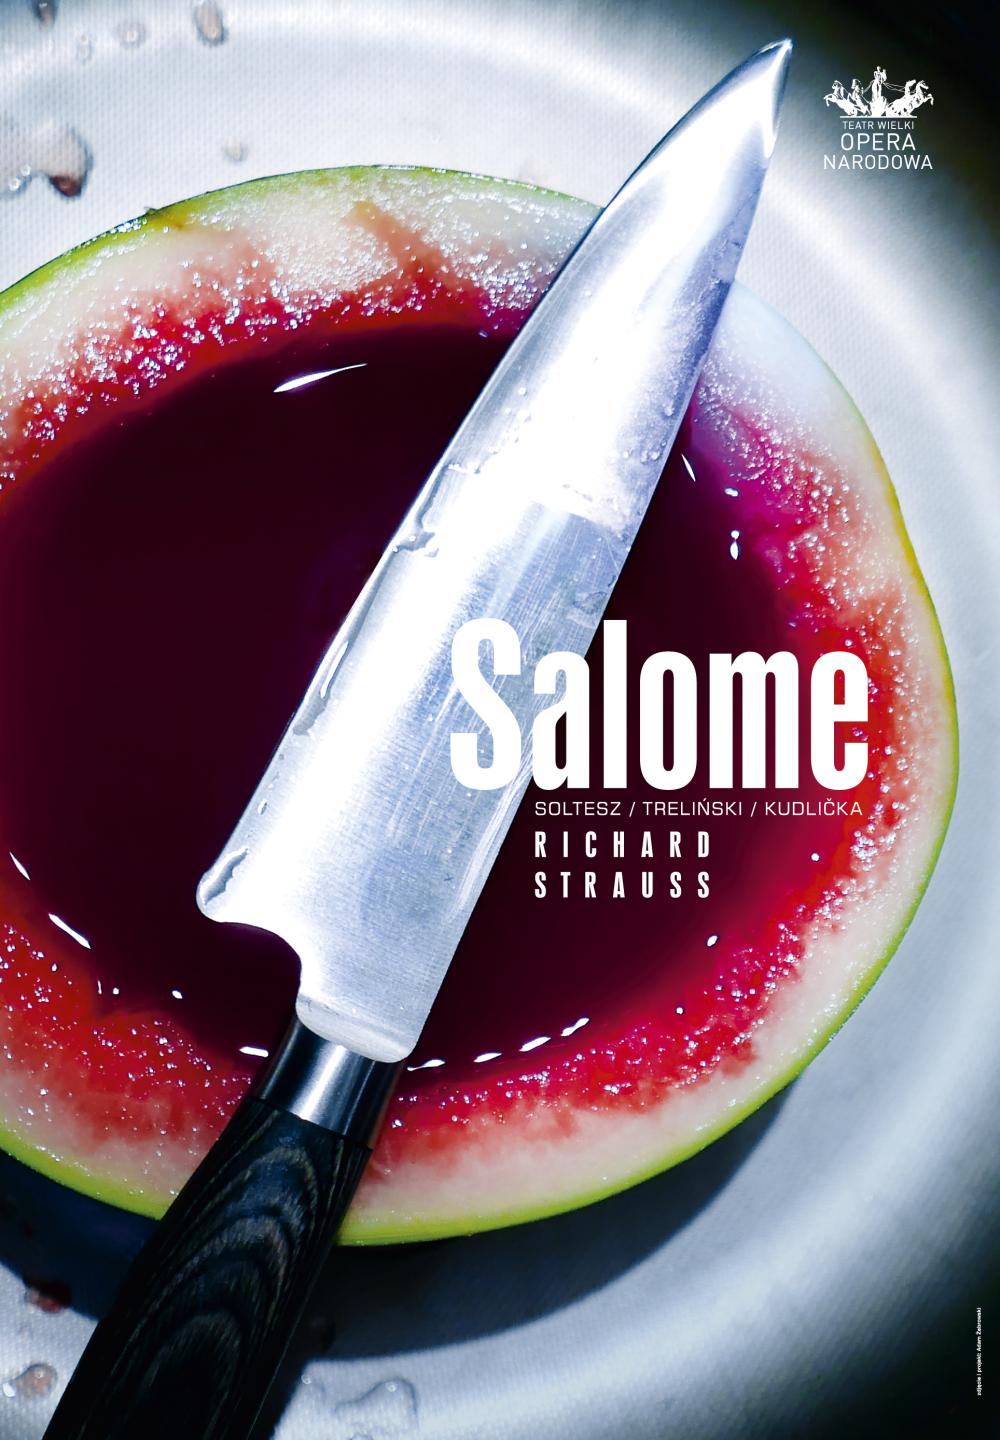 Plakat „Salome” Richard Strauss premiera 2016-03-22